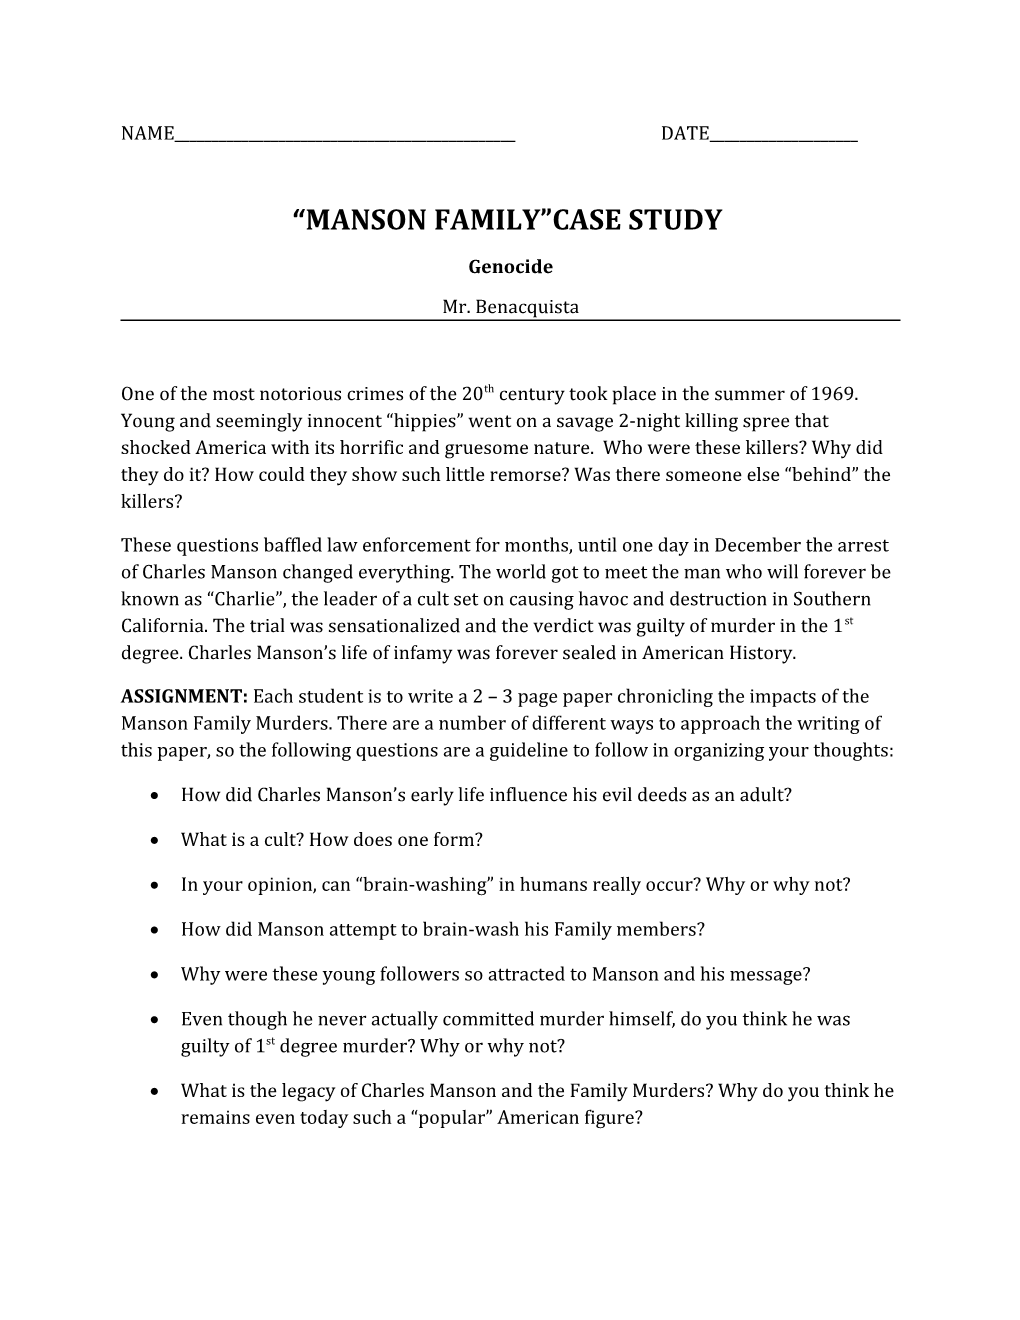 Manson Family Case Study